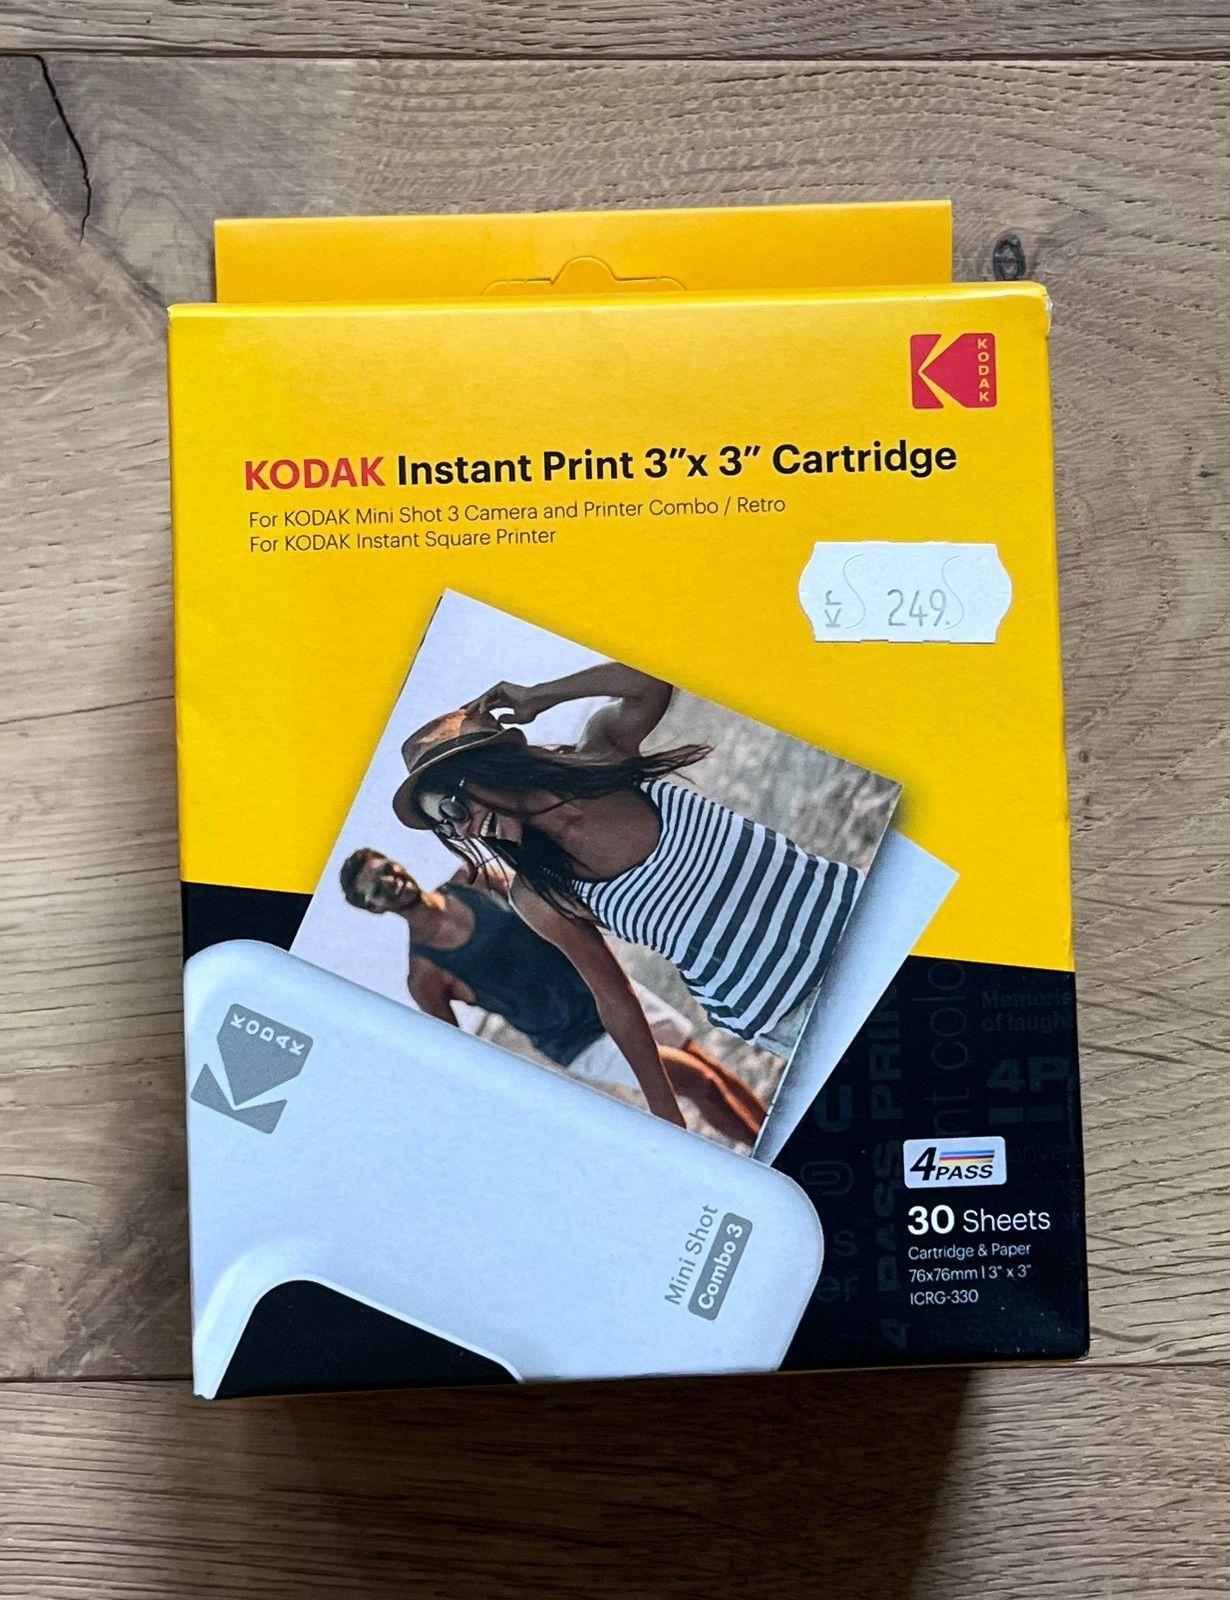 Ubrukt Kodak Instant print 3x3 cartridge